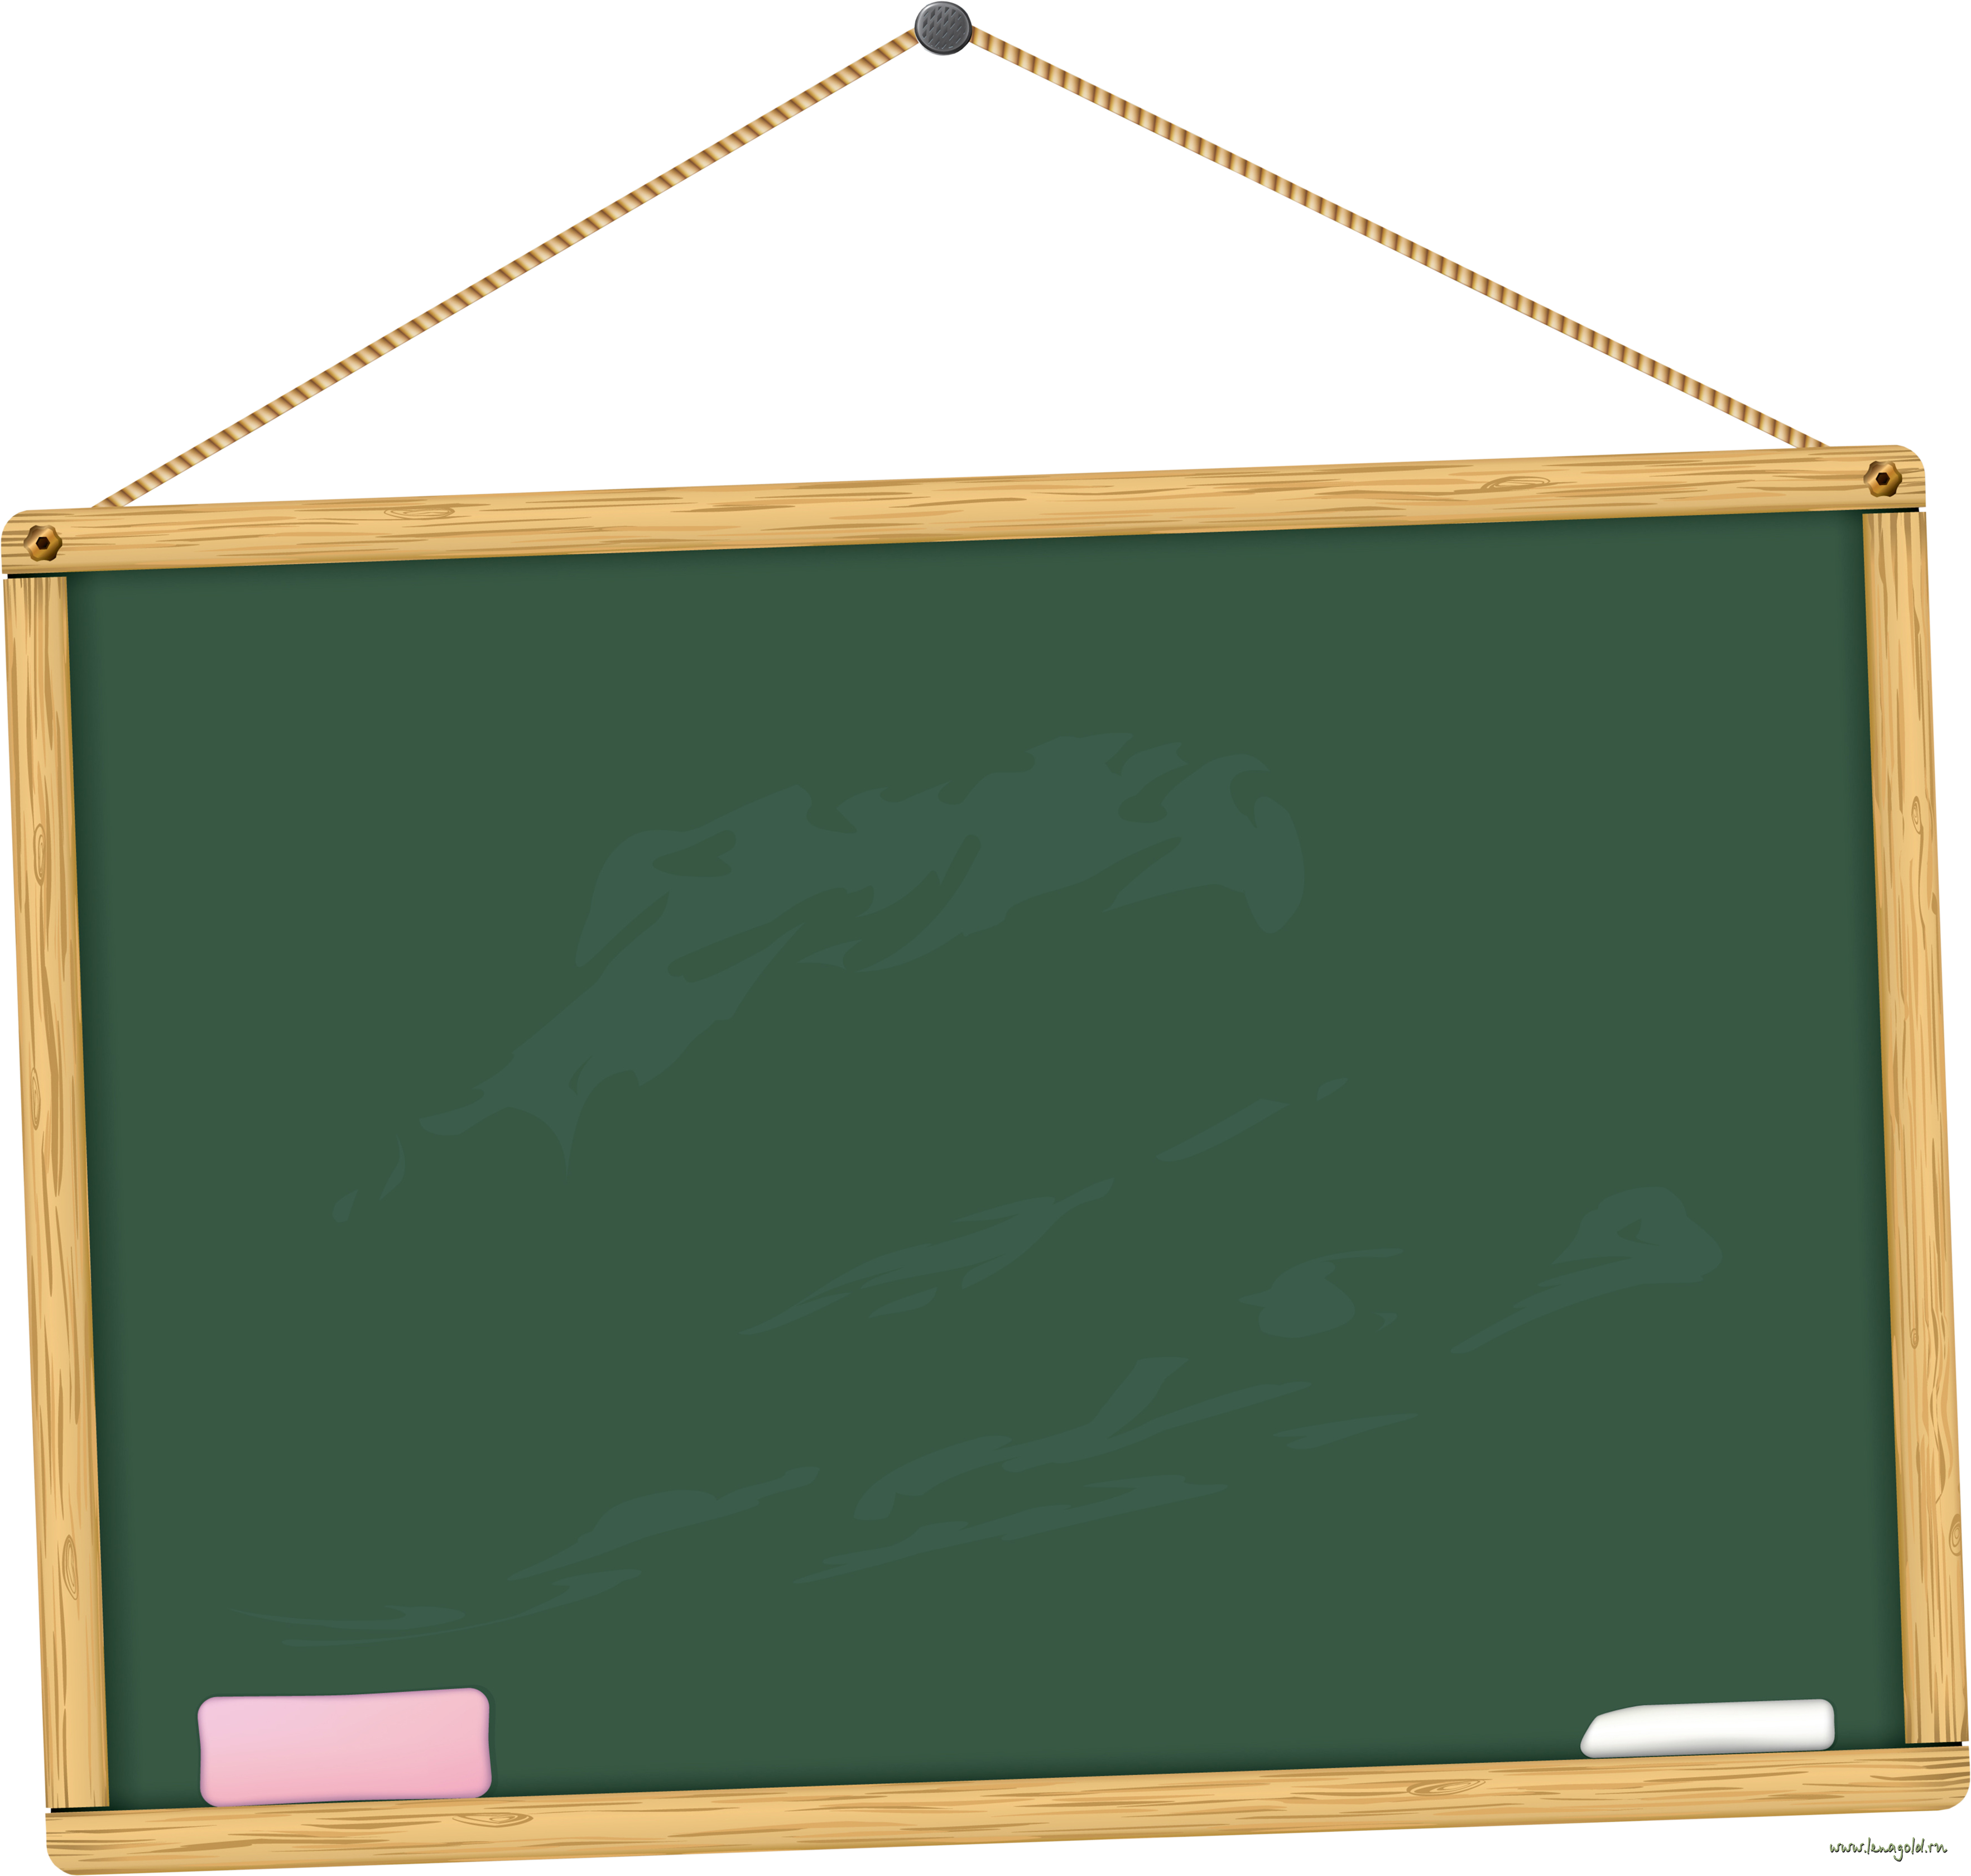 Classroom Blackboard School Cartoon Student PNG File HD Clipart